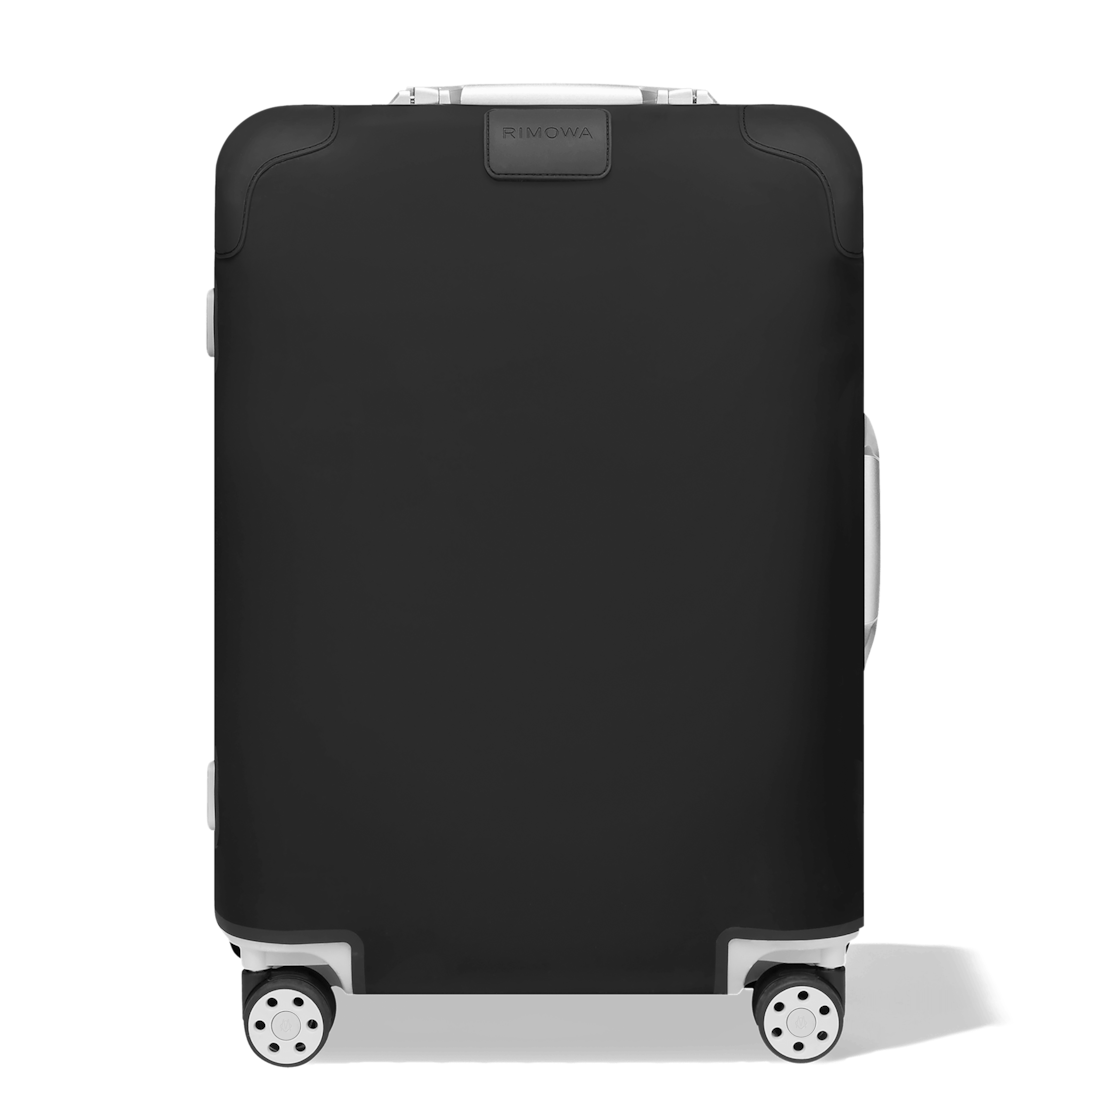 rimowa suitcase protector